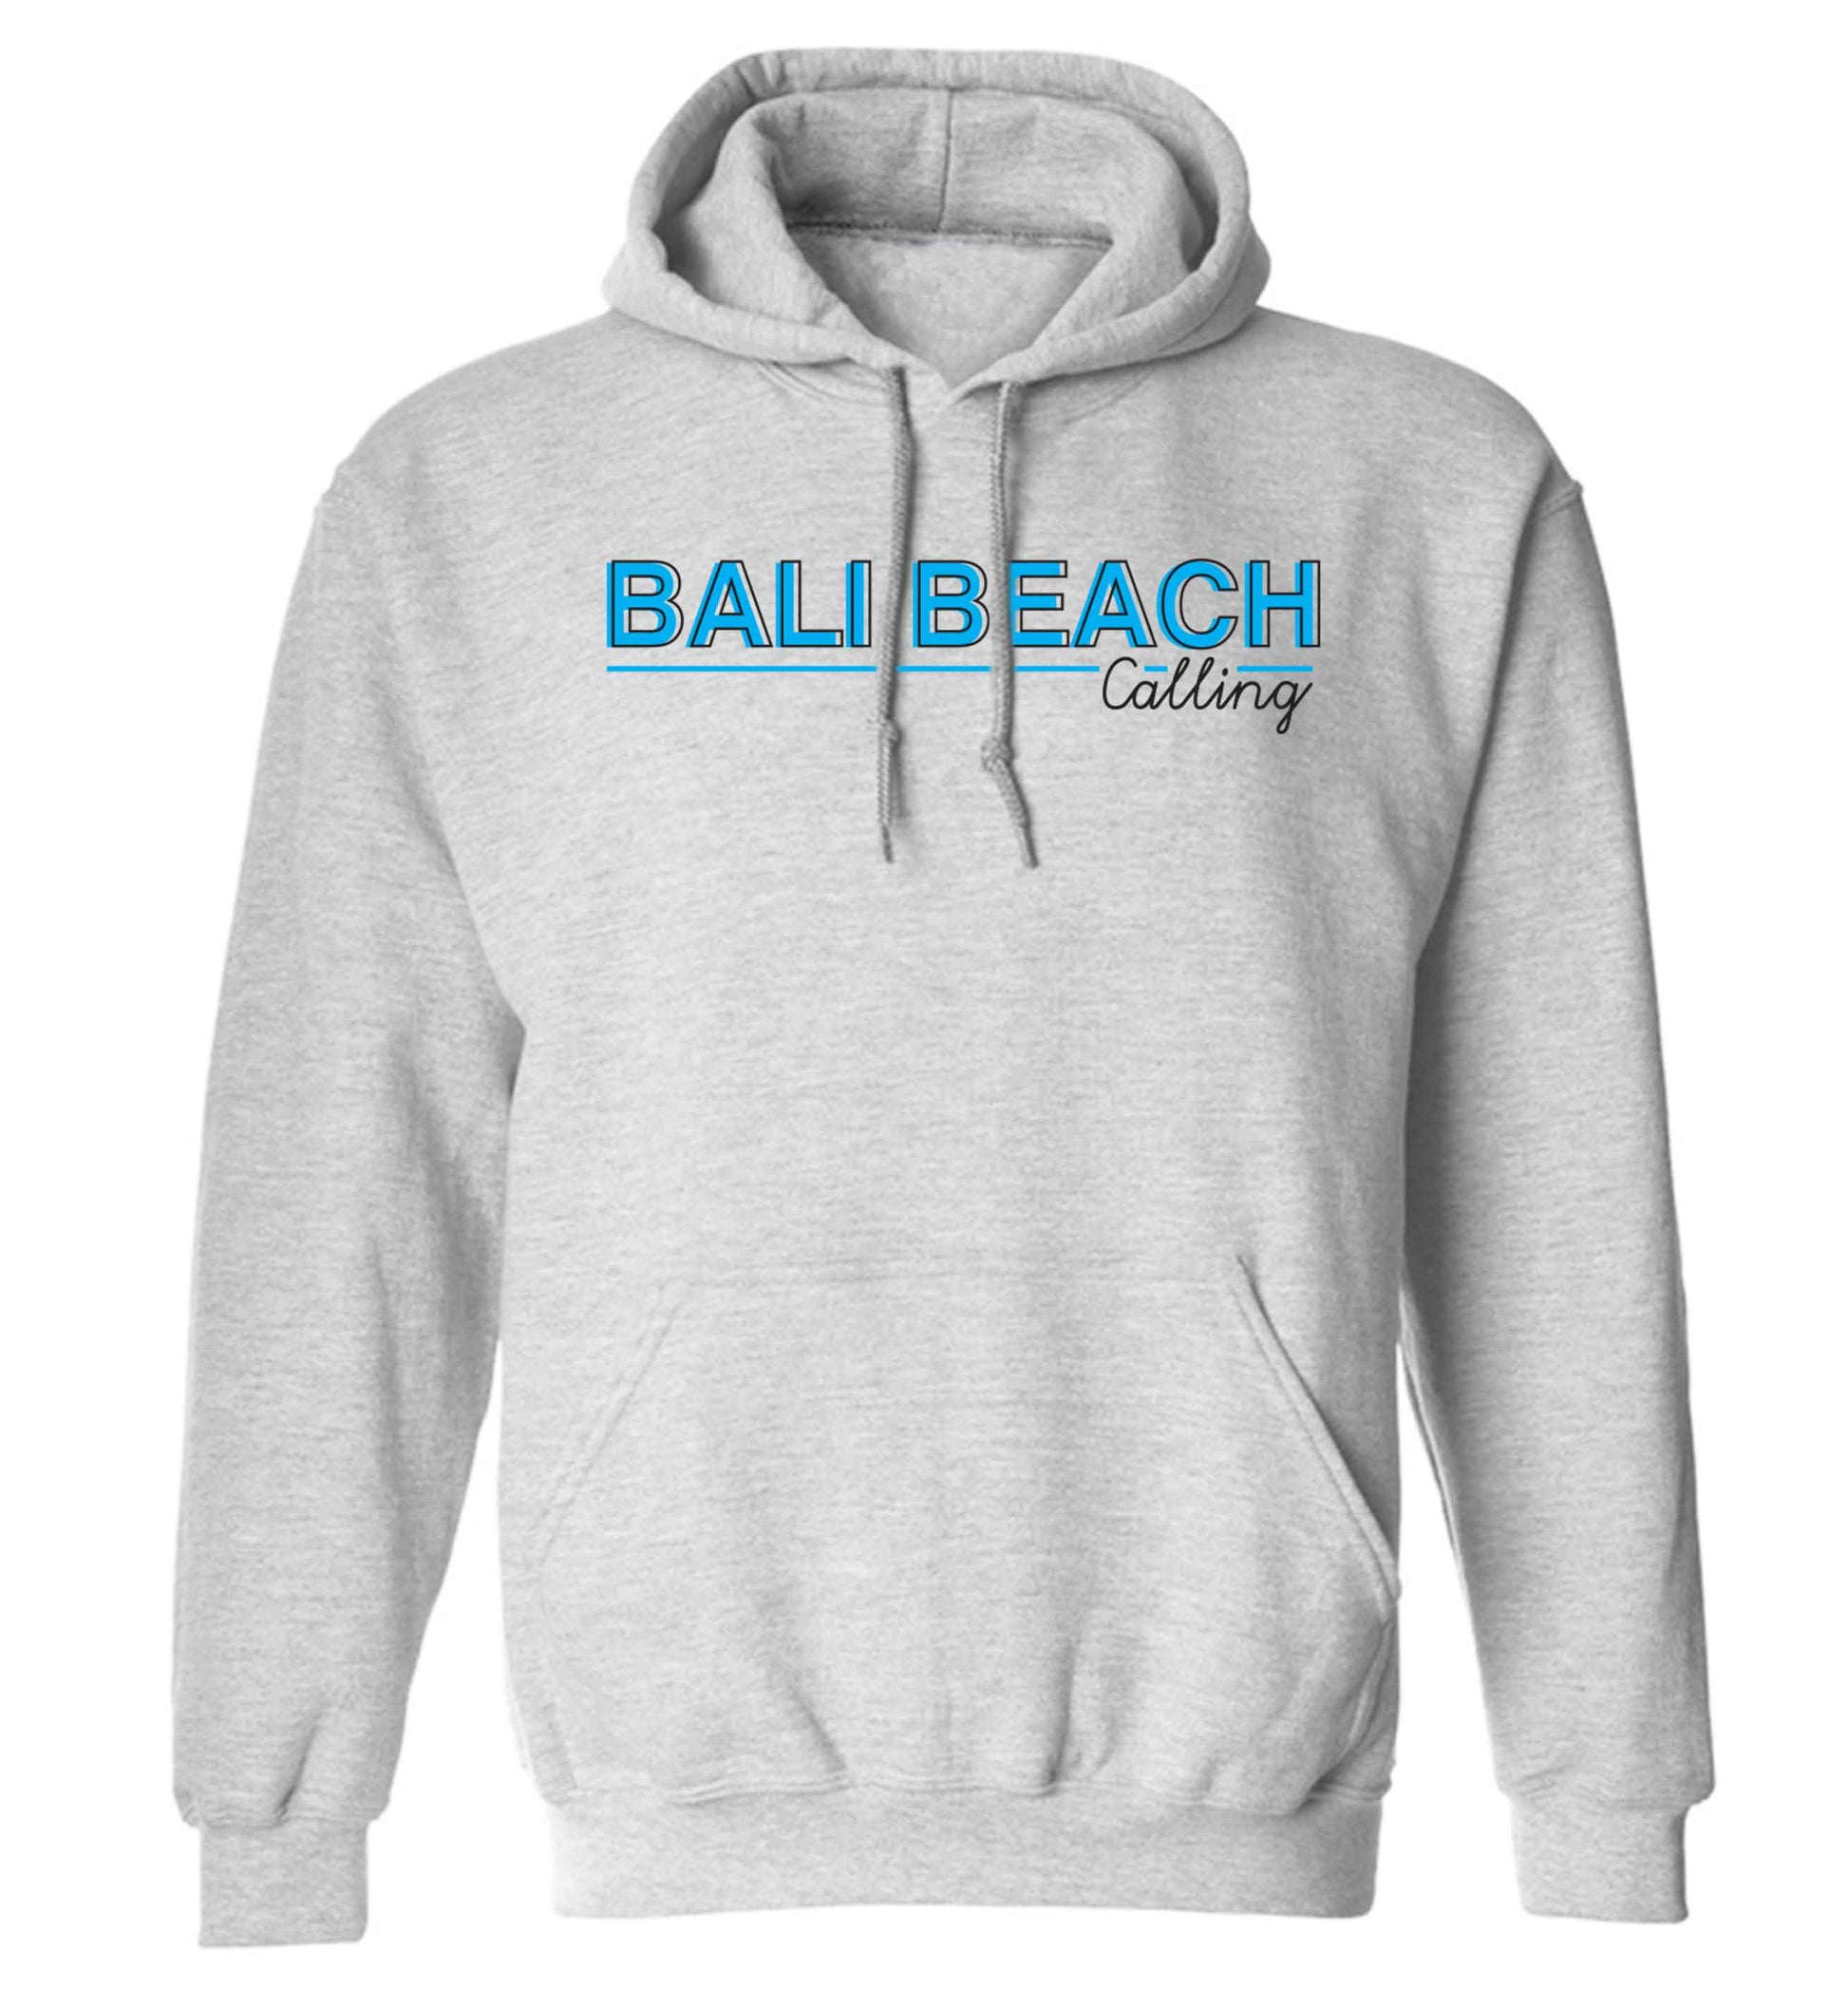 Bali beach calling adults unisex grey hoodie 2XL